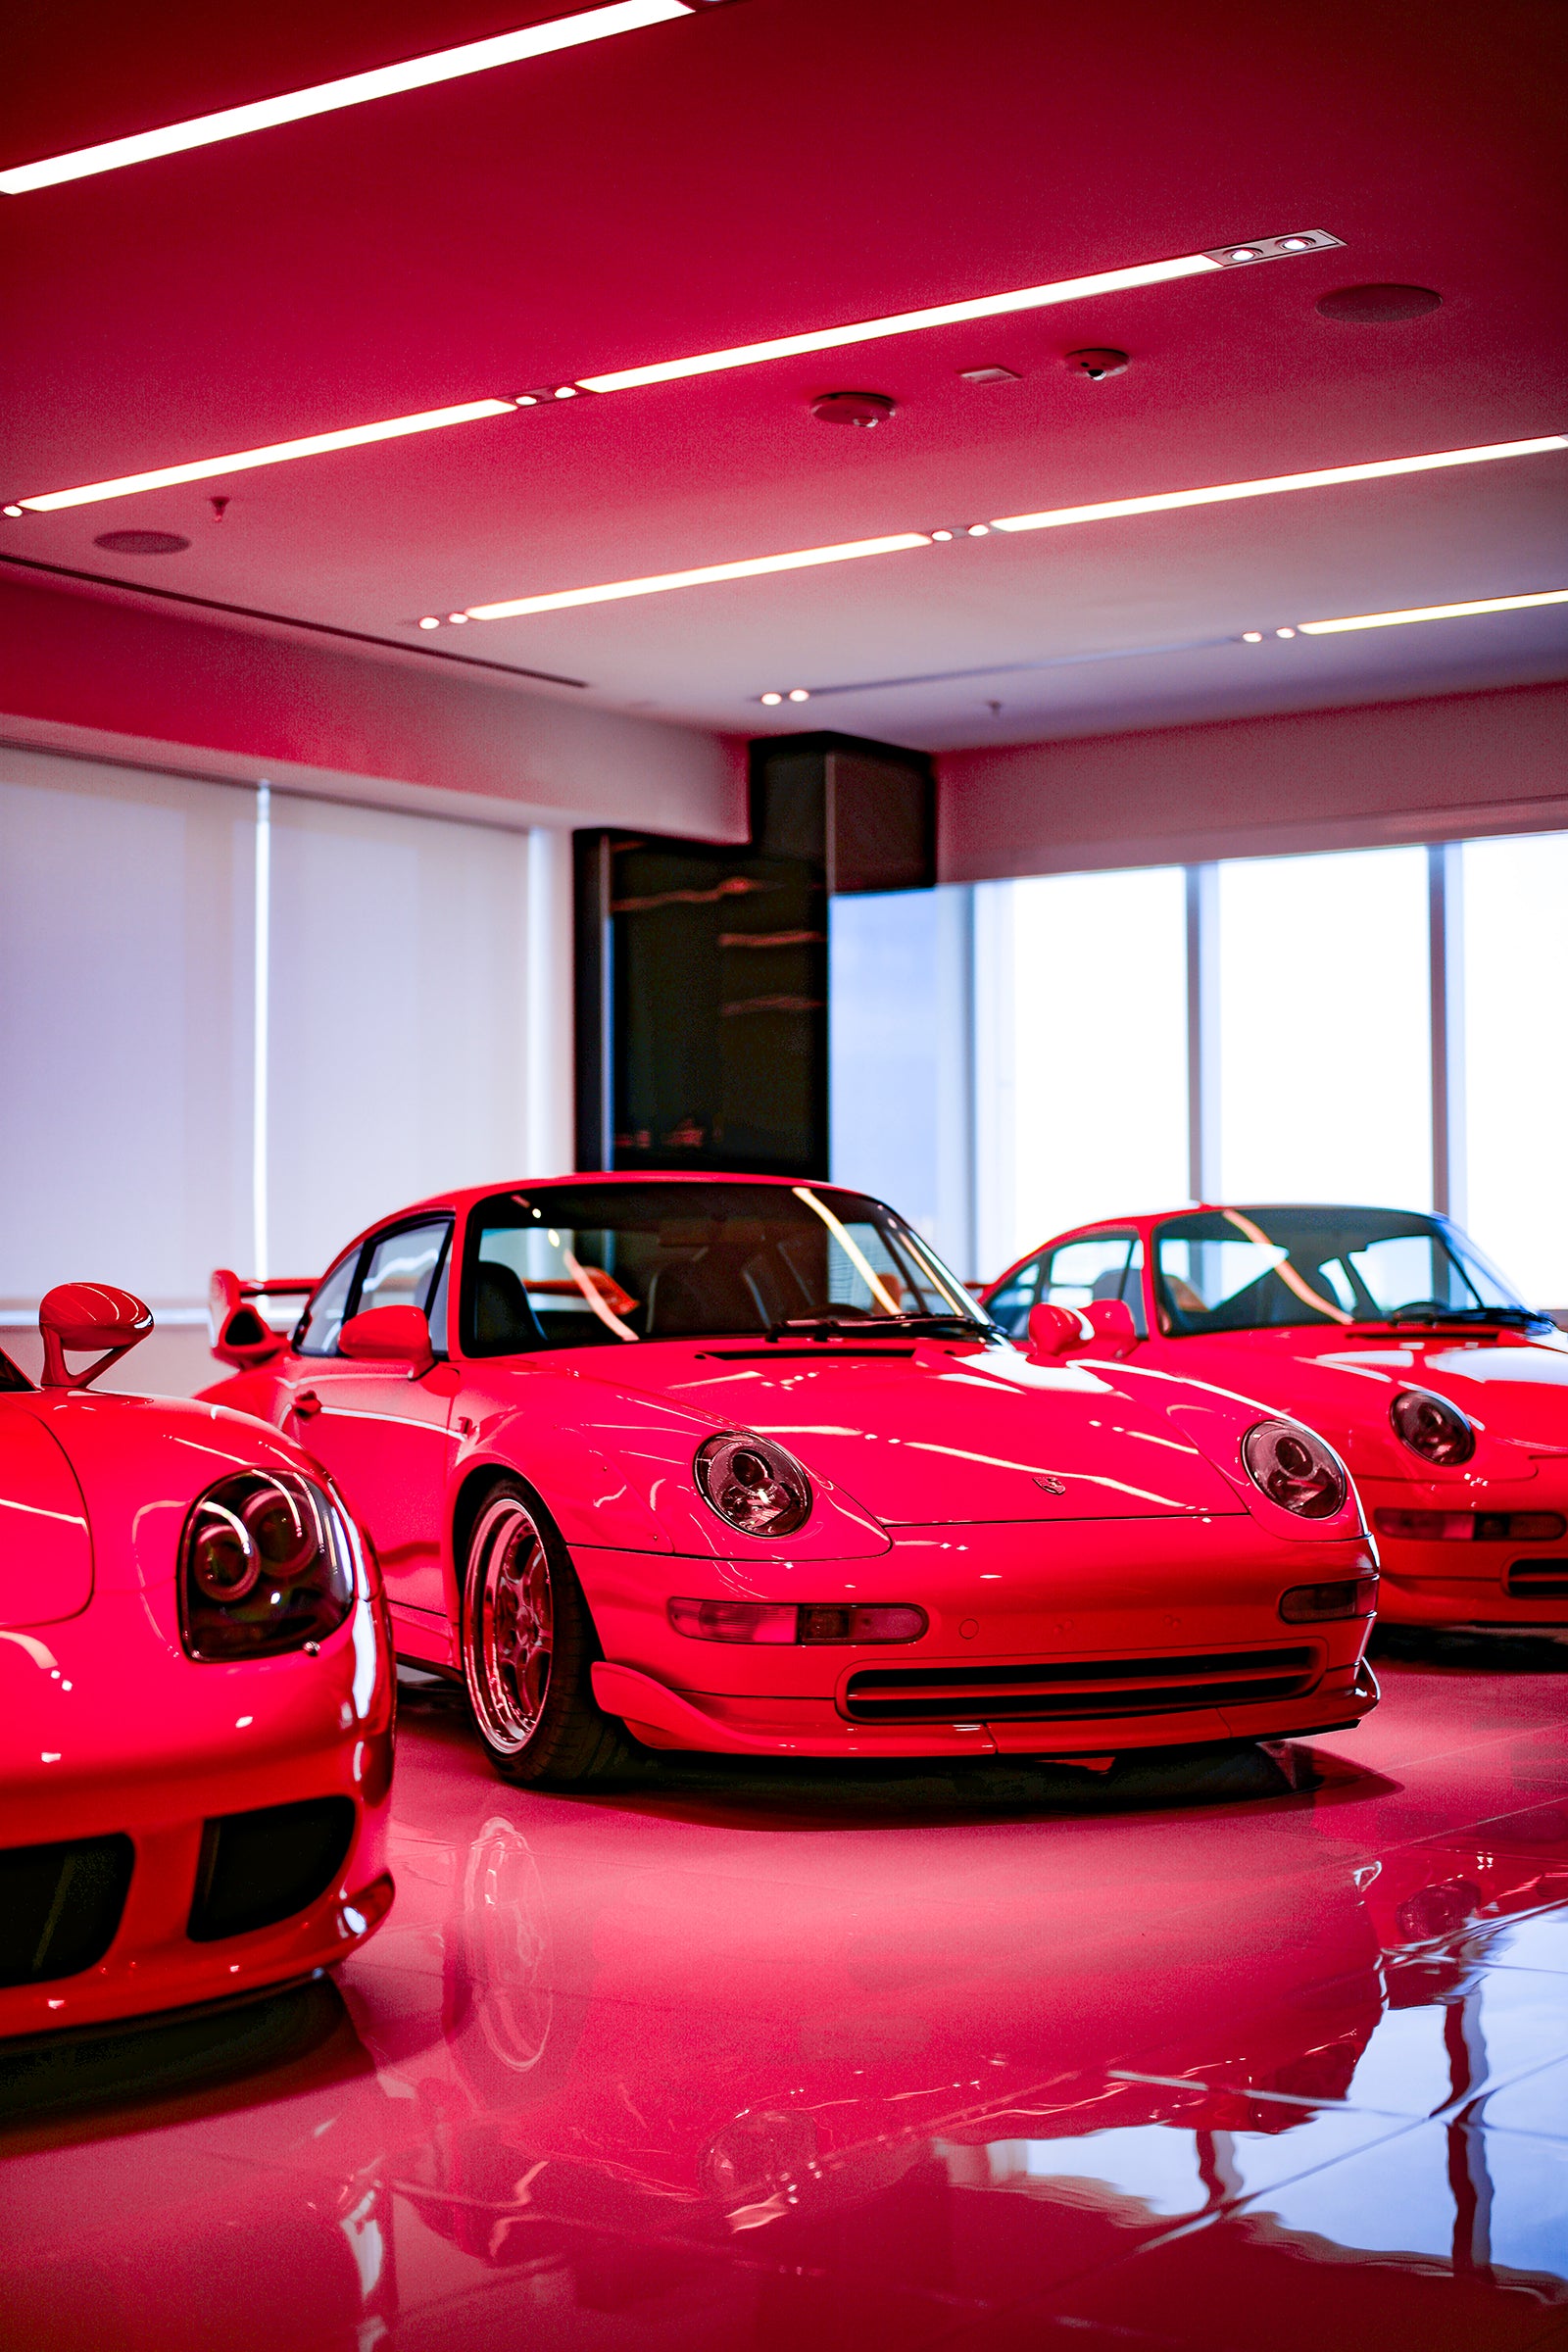 The Pink Porsche Picture